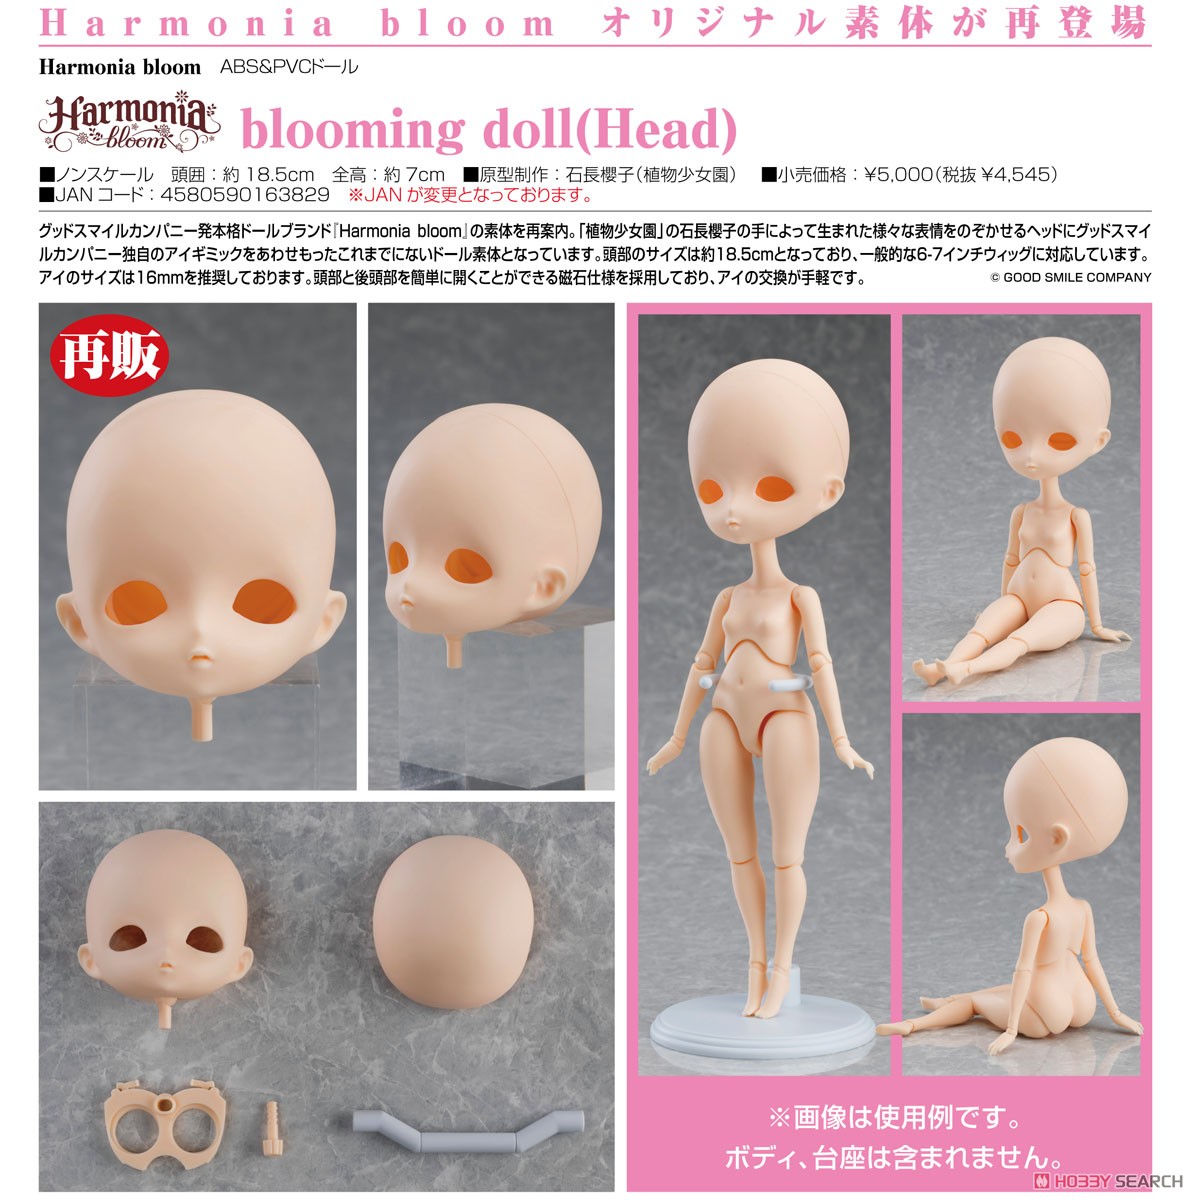 Harmonia bloom blooming doll (Head) (ドール) その他の画像4